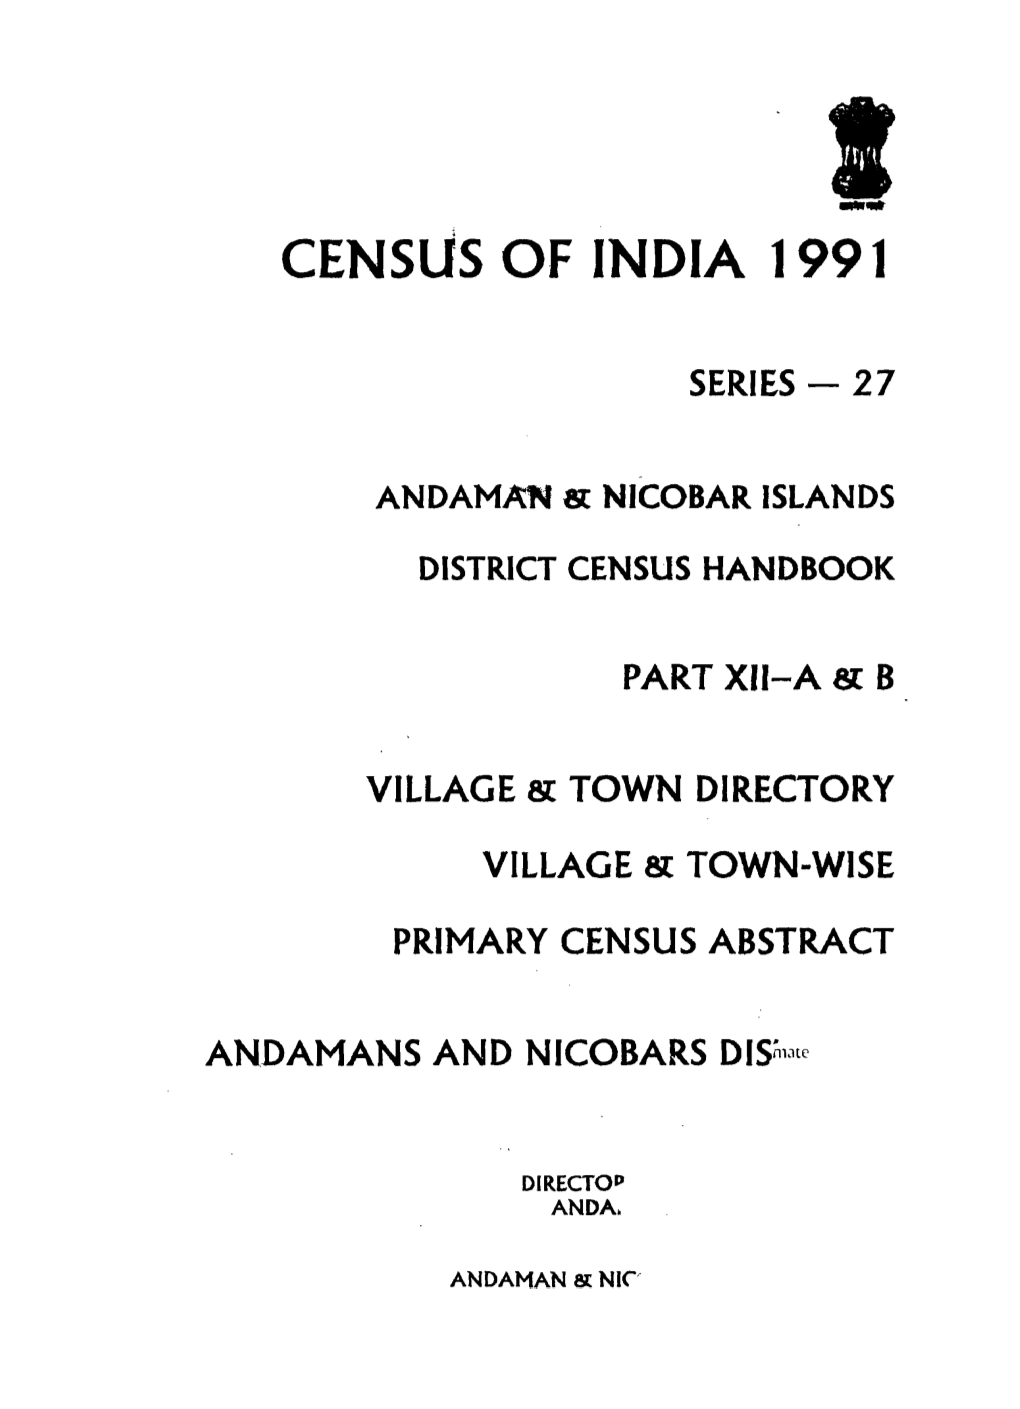 District Census Handbook, Andamans and Nicobars, Part XII-A & B